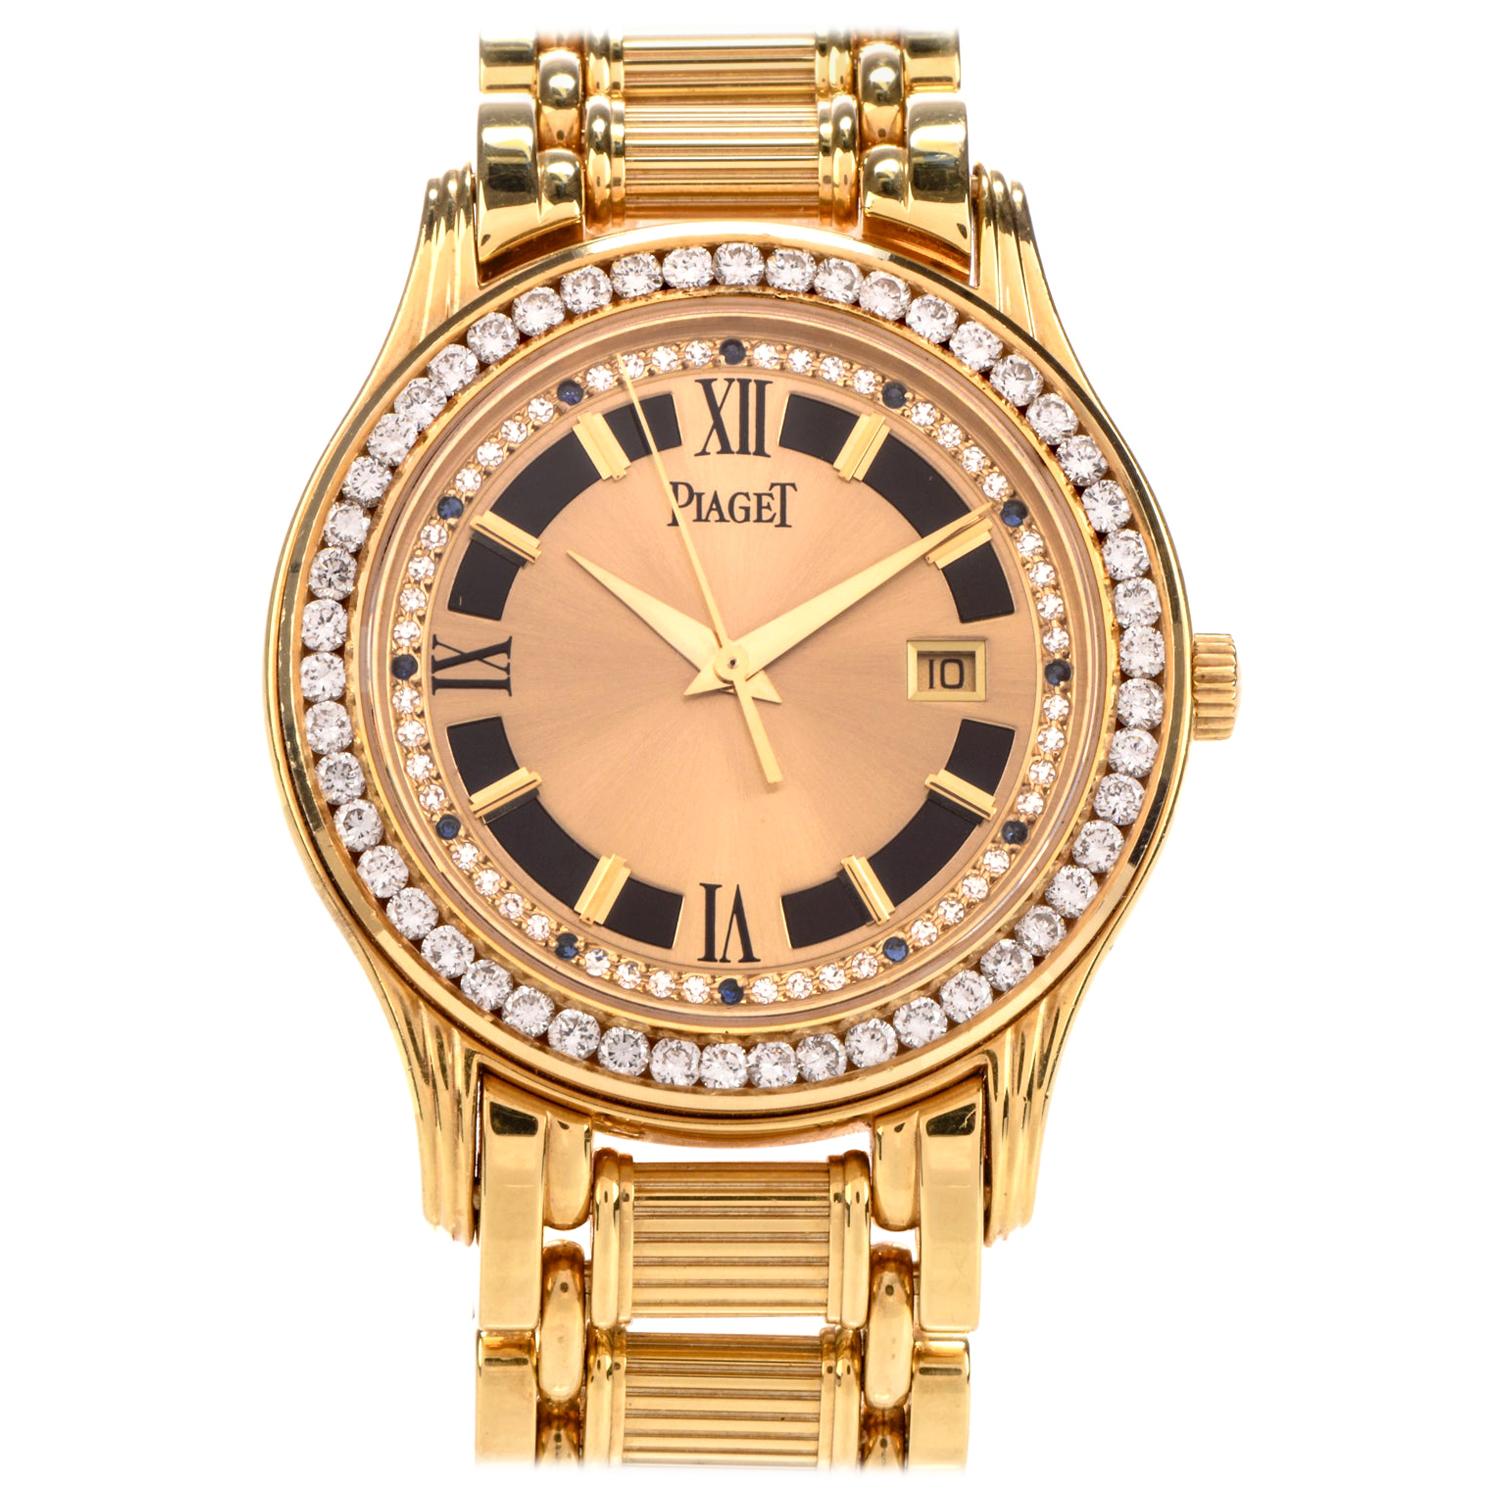 Piaget Polo 24005 M 503 D Diamond Onyx 18 Karat Yellow Gold Watch